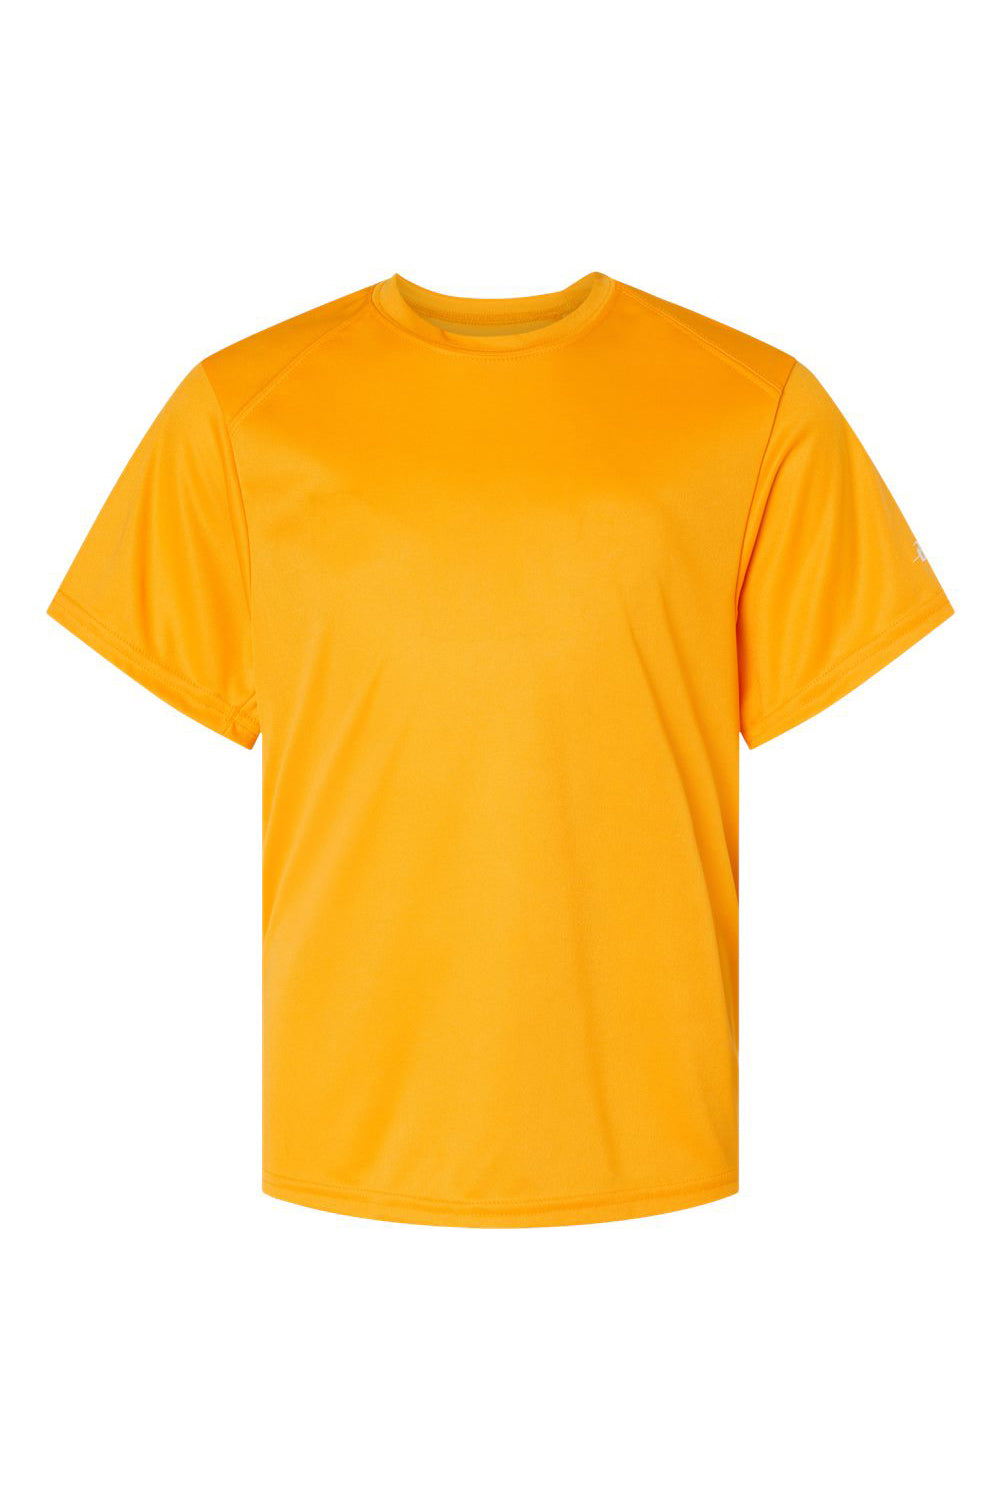 Badger 2120 Youth B-Core Moisture Wicking Short Sleeve Crewneck T-Shirt Gold Flat Front